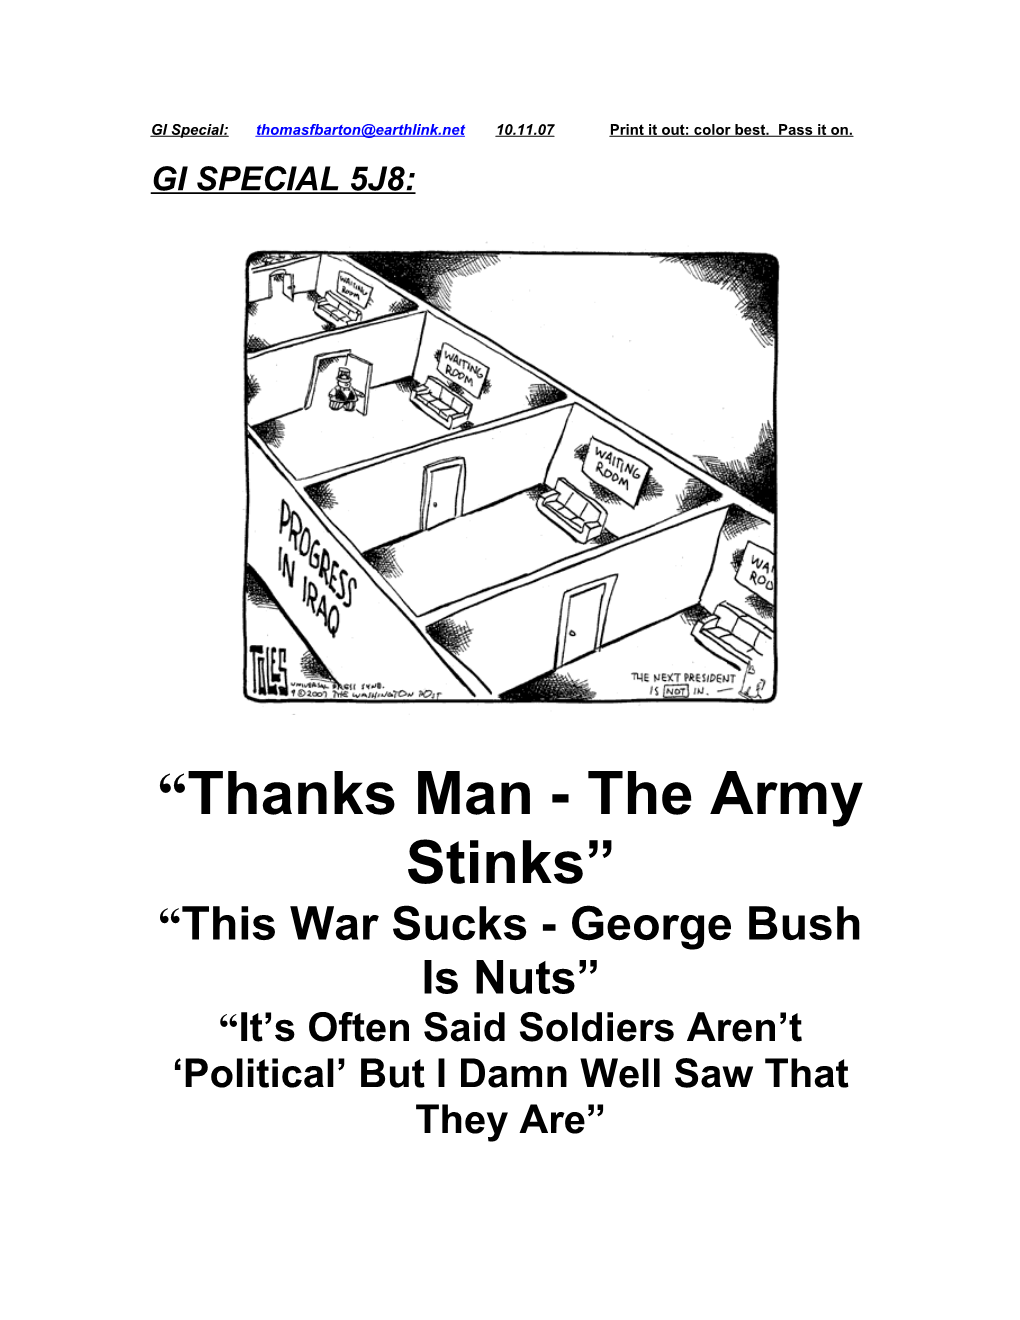 Thanks Man - the Army Stinks